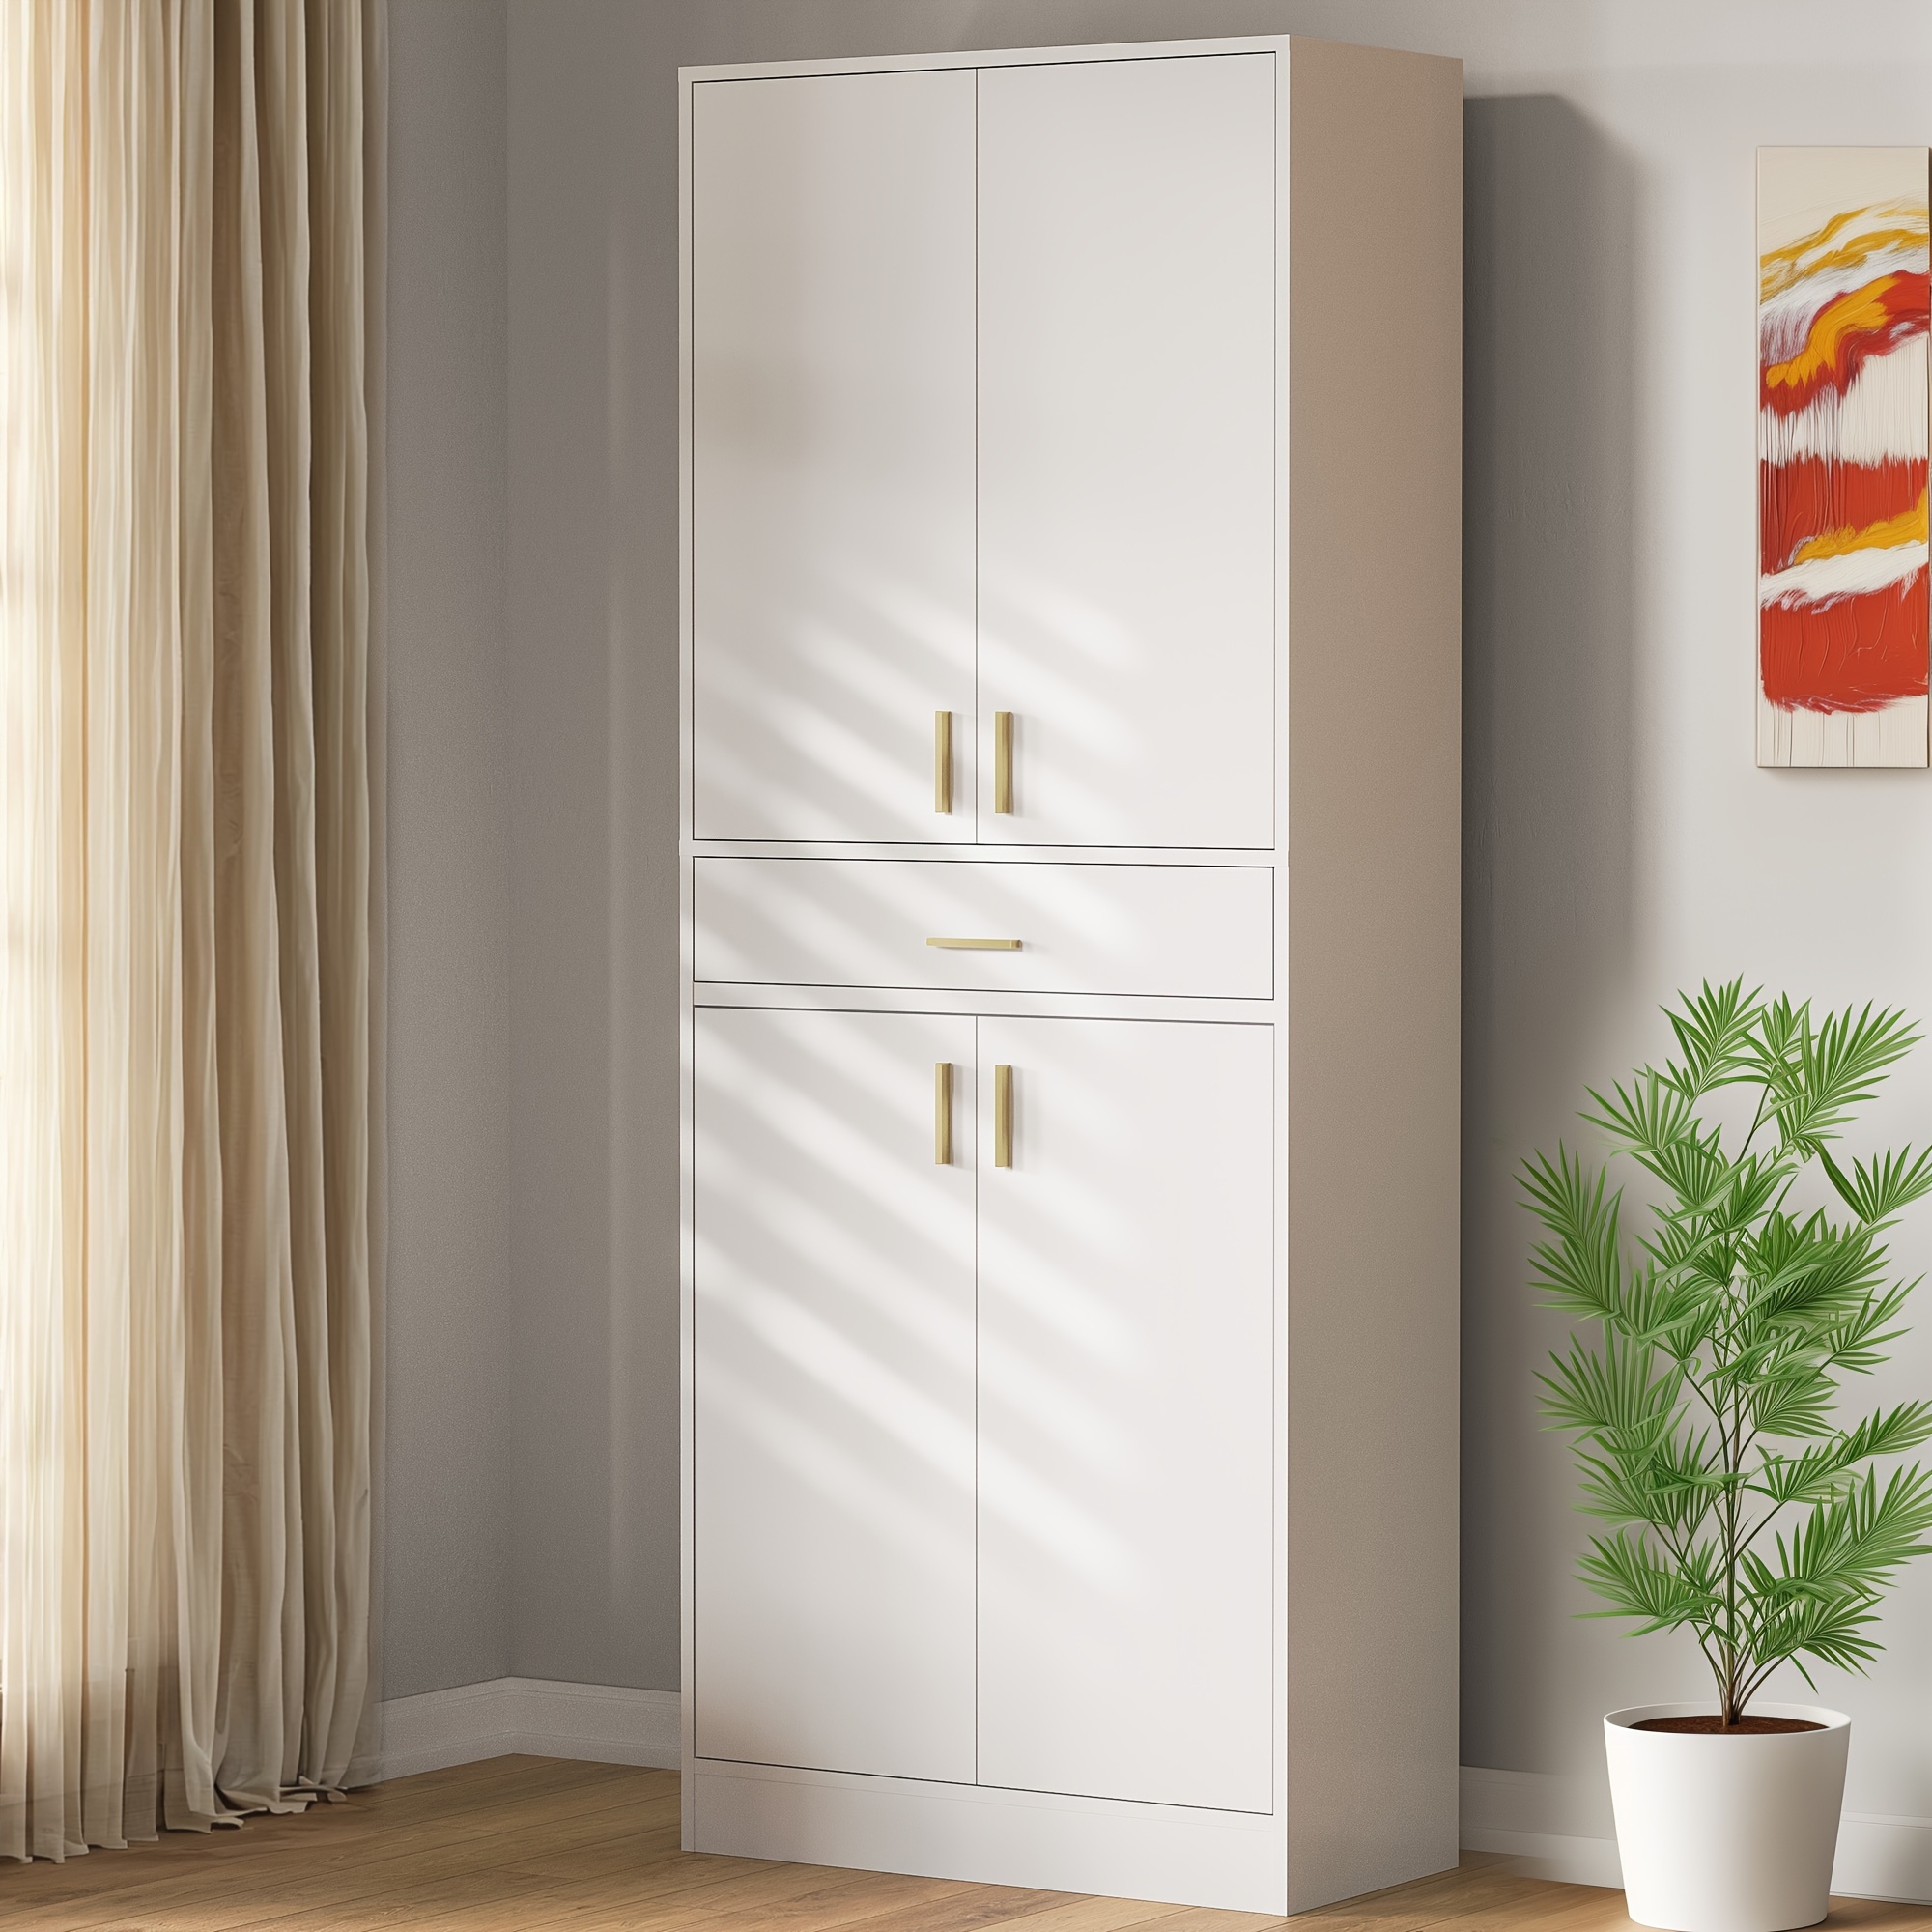 

Aurorome 70" Kitchen Pantry, Freestanding , And Adjustable Shelves For Kitchen, Bathroom Or Hallway